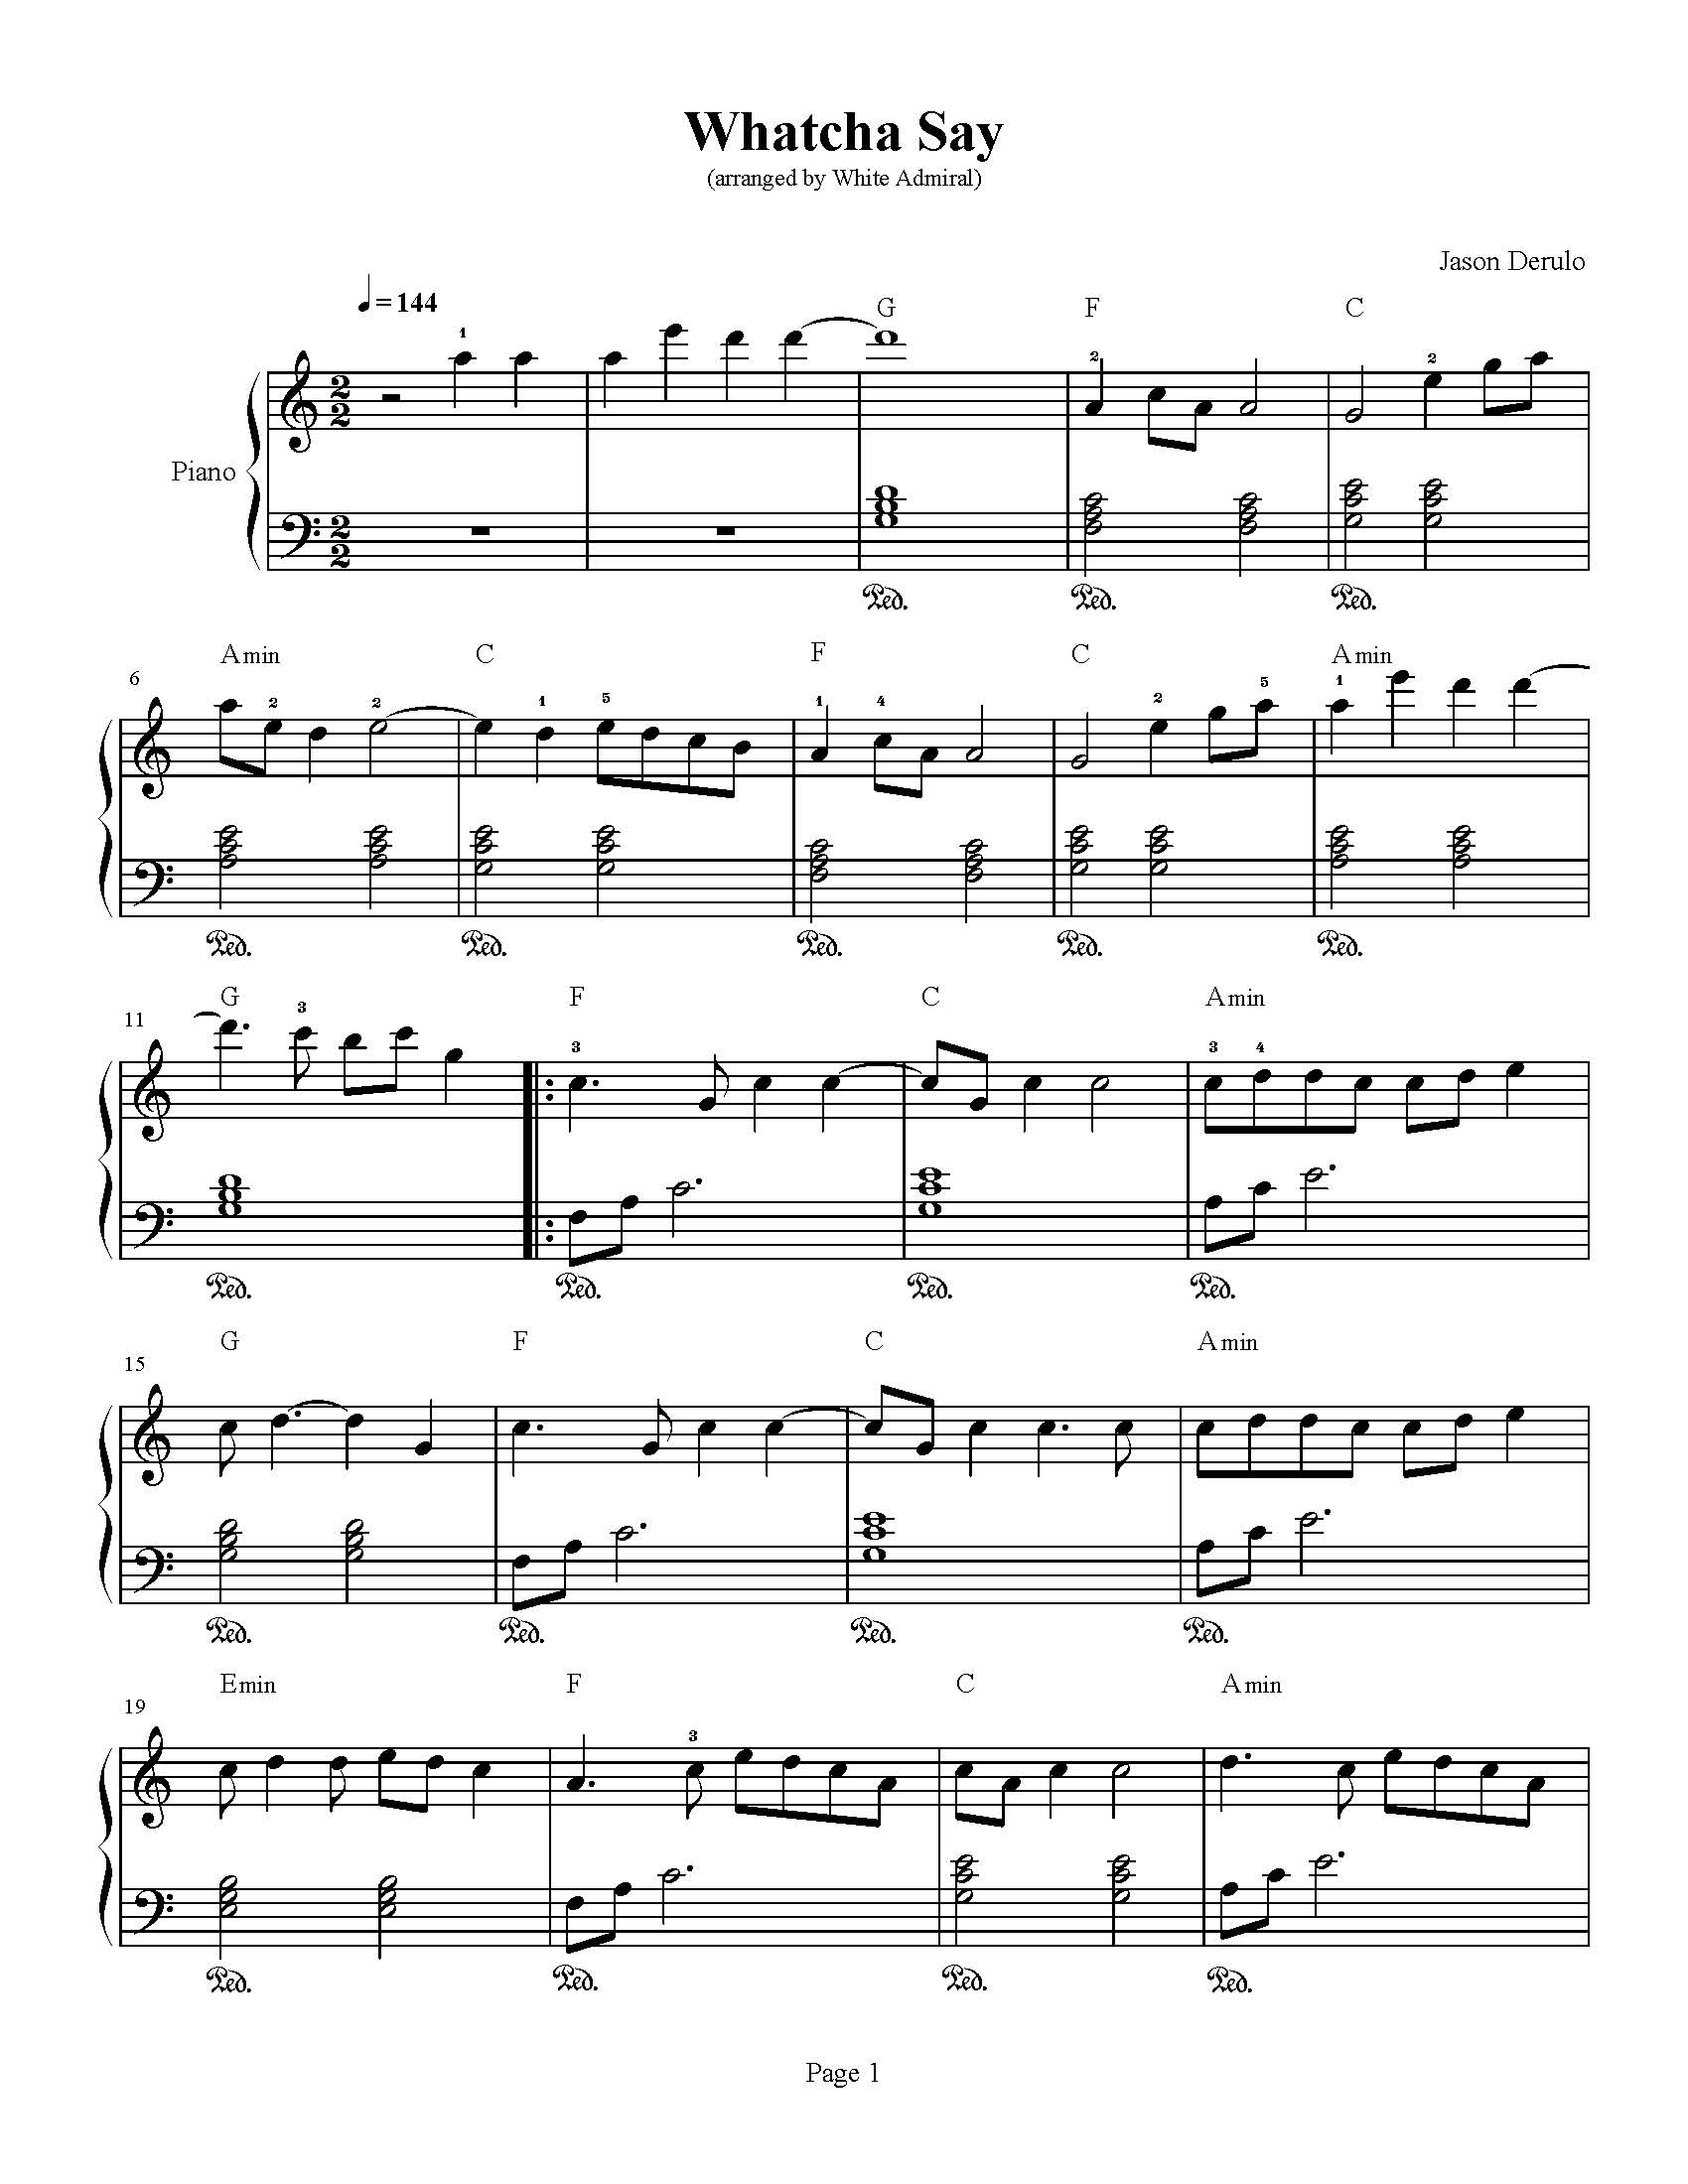 Whatcha Say - Jason Derulo | True Piano Transcriptions